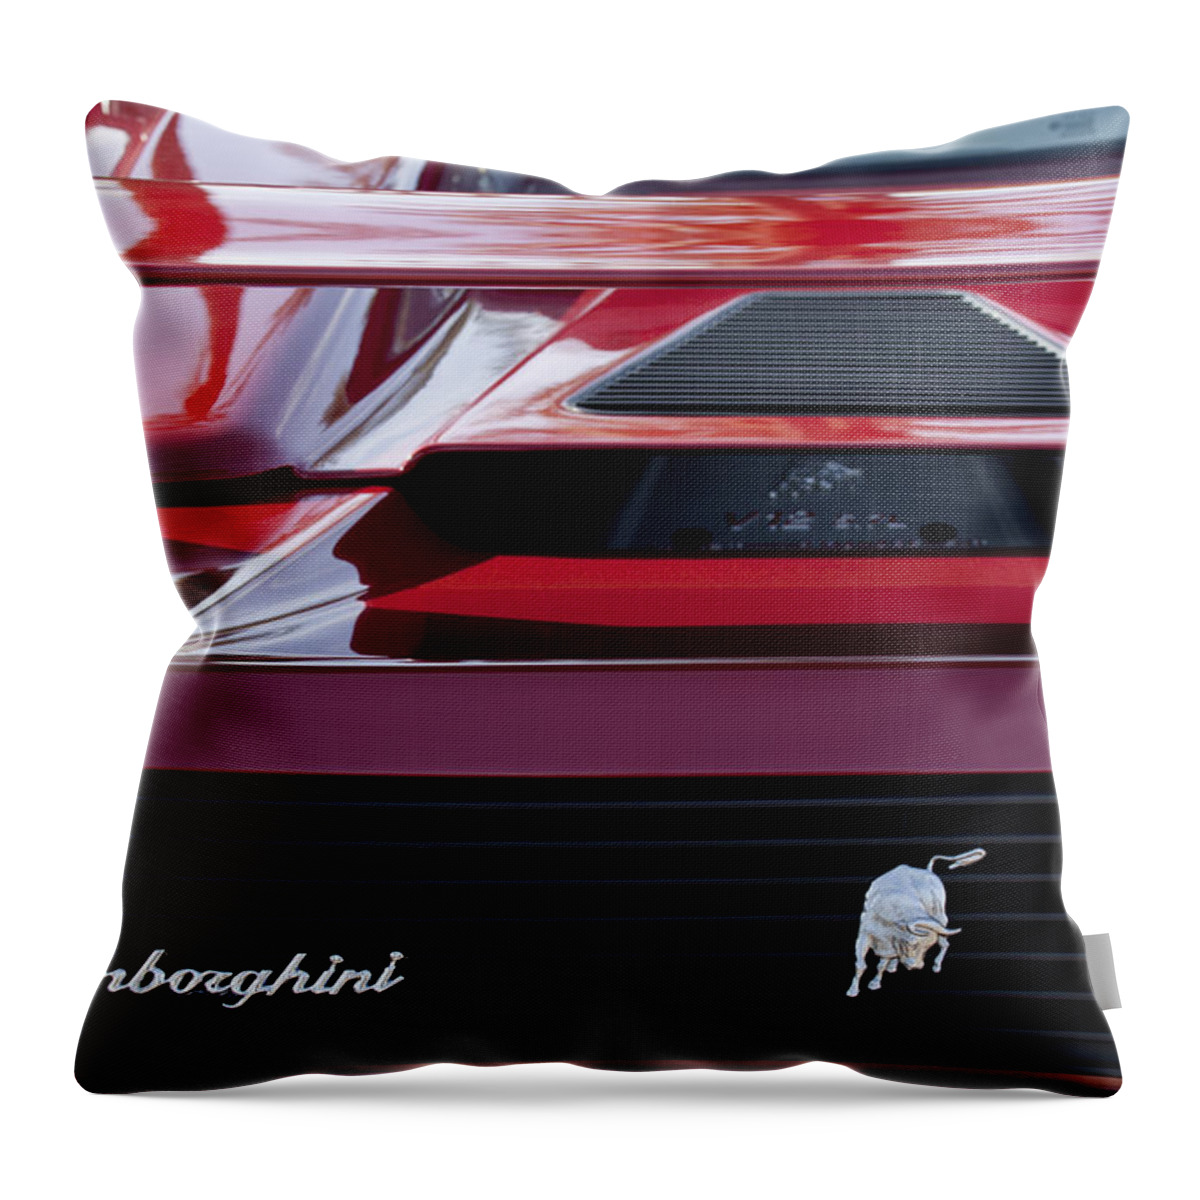 Lamborghini Throw Pillow featuring the photograph Lamborghini Rear View by Jill Reger